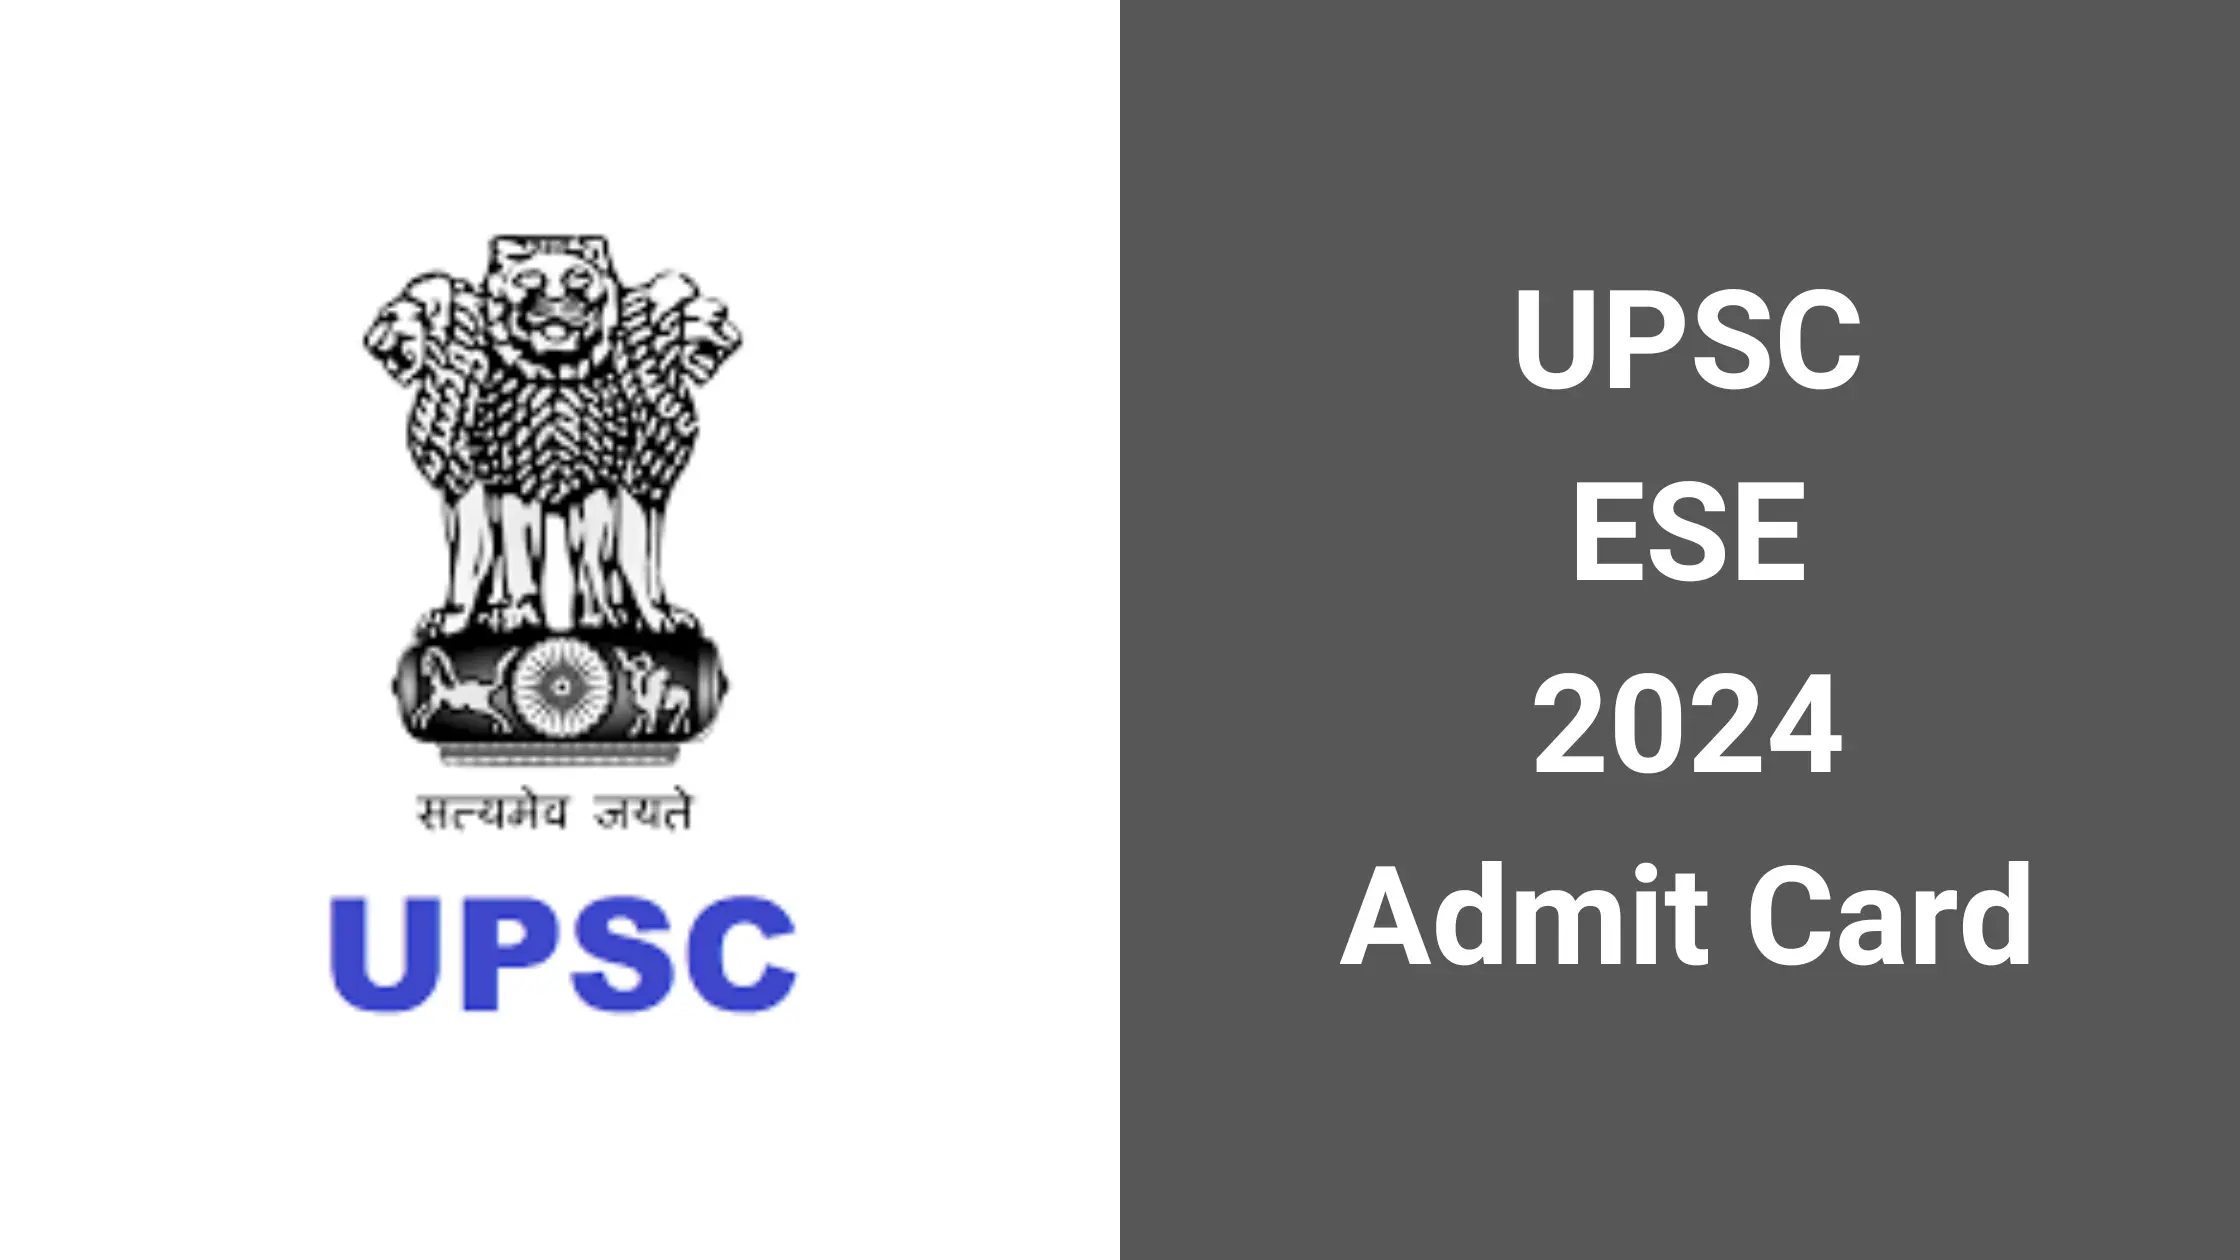 UPSC ESE 2024 Admit Card